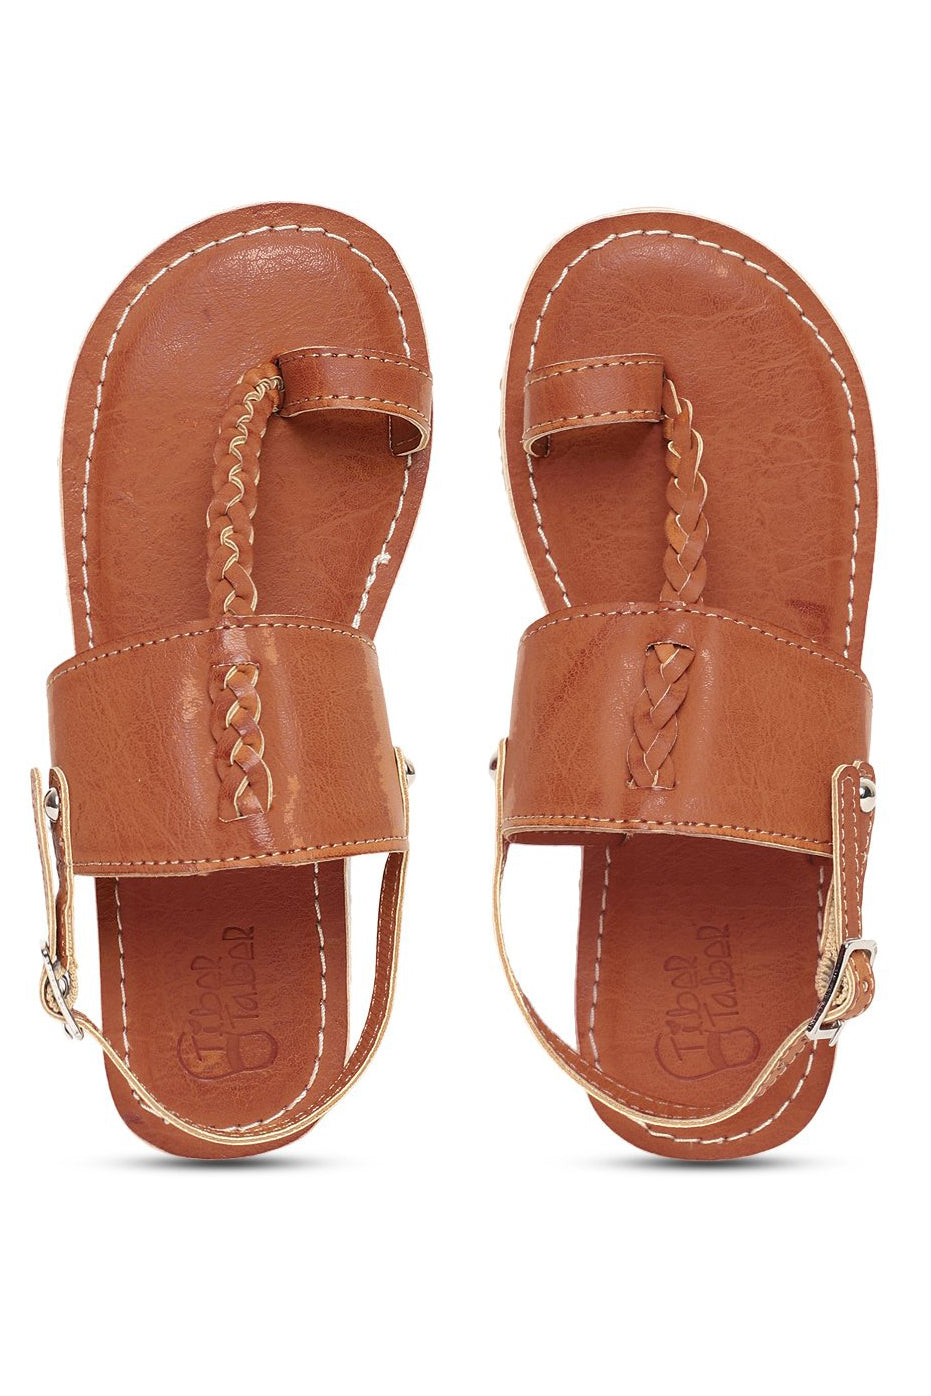 Metro Boys Brown Synthetic Sandals (47-4489-12-25) Size (8C UK/India  (25EU)) : Amazon.in: Fashion